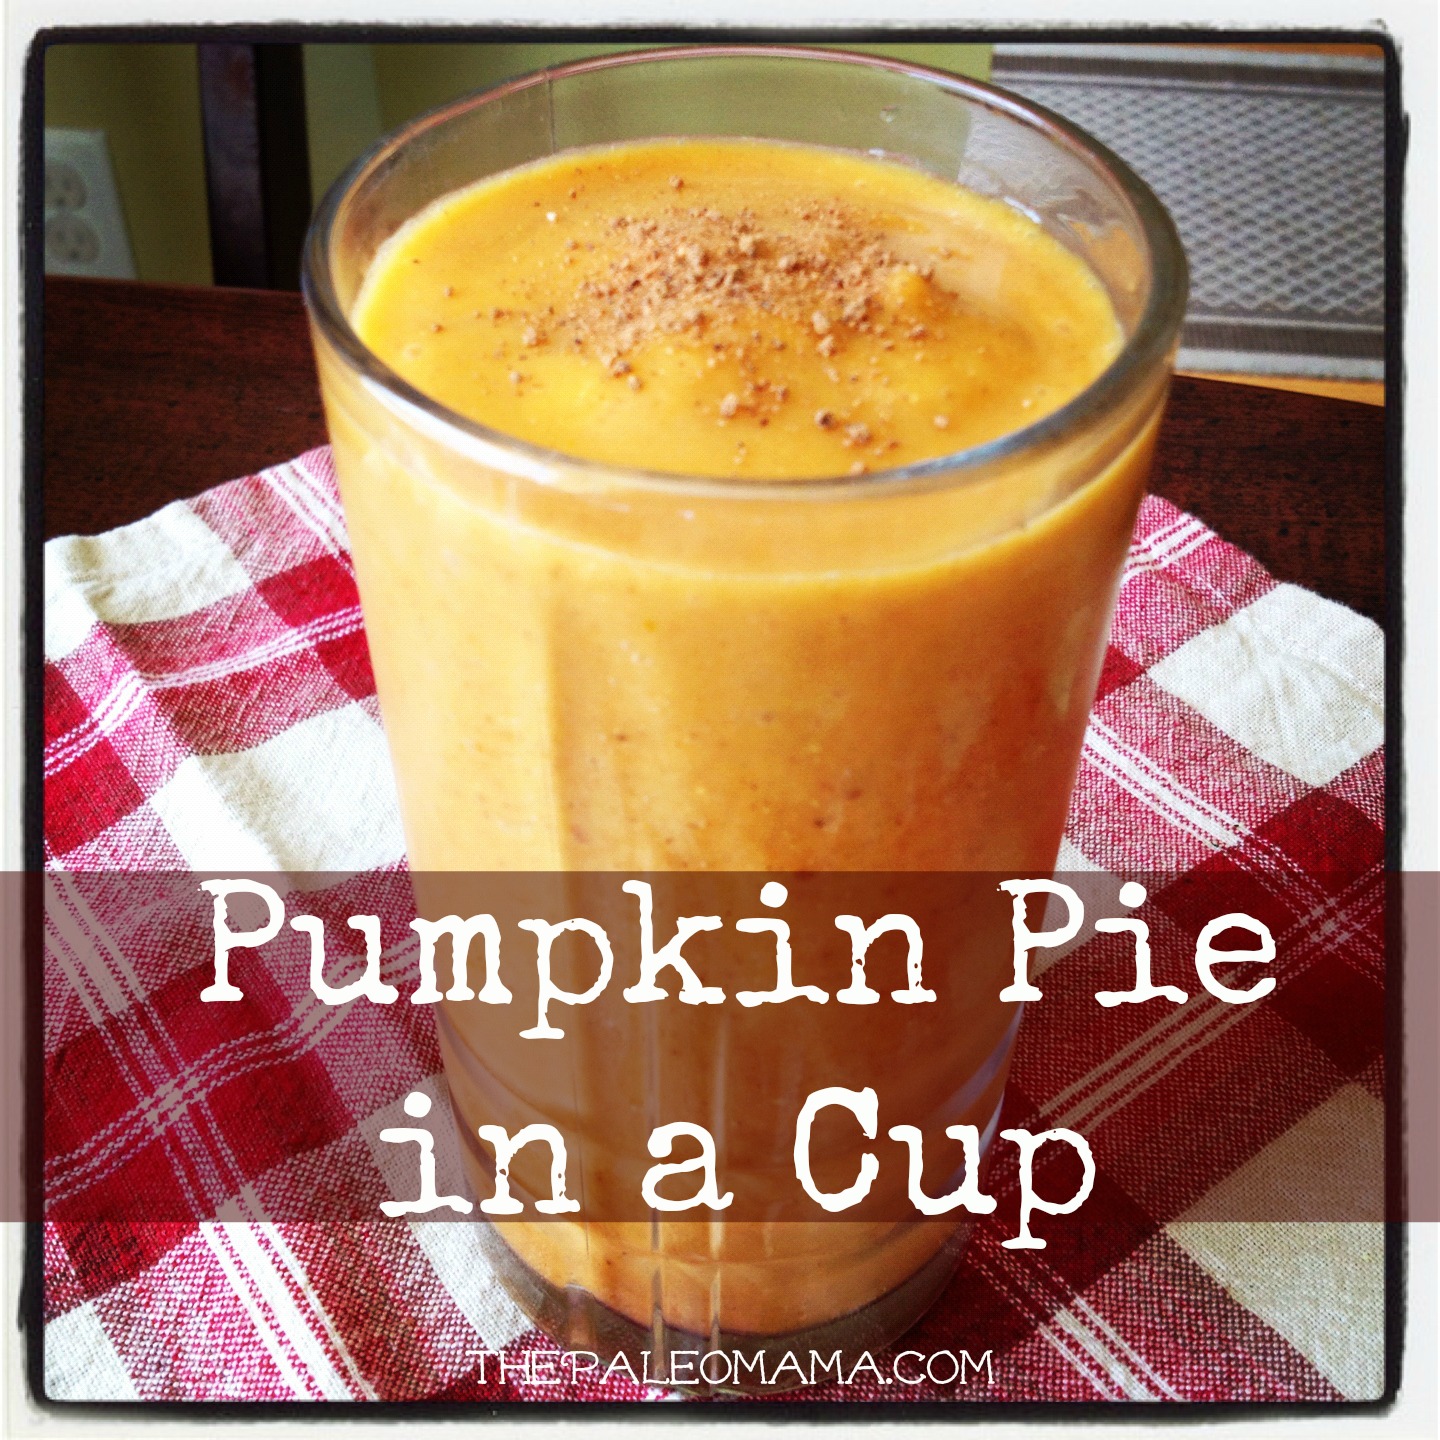 Pumpkin Pie in a Cup!